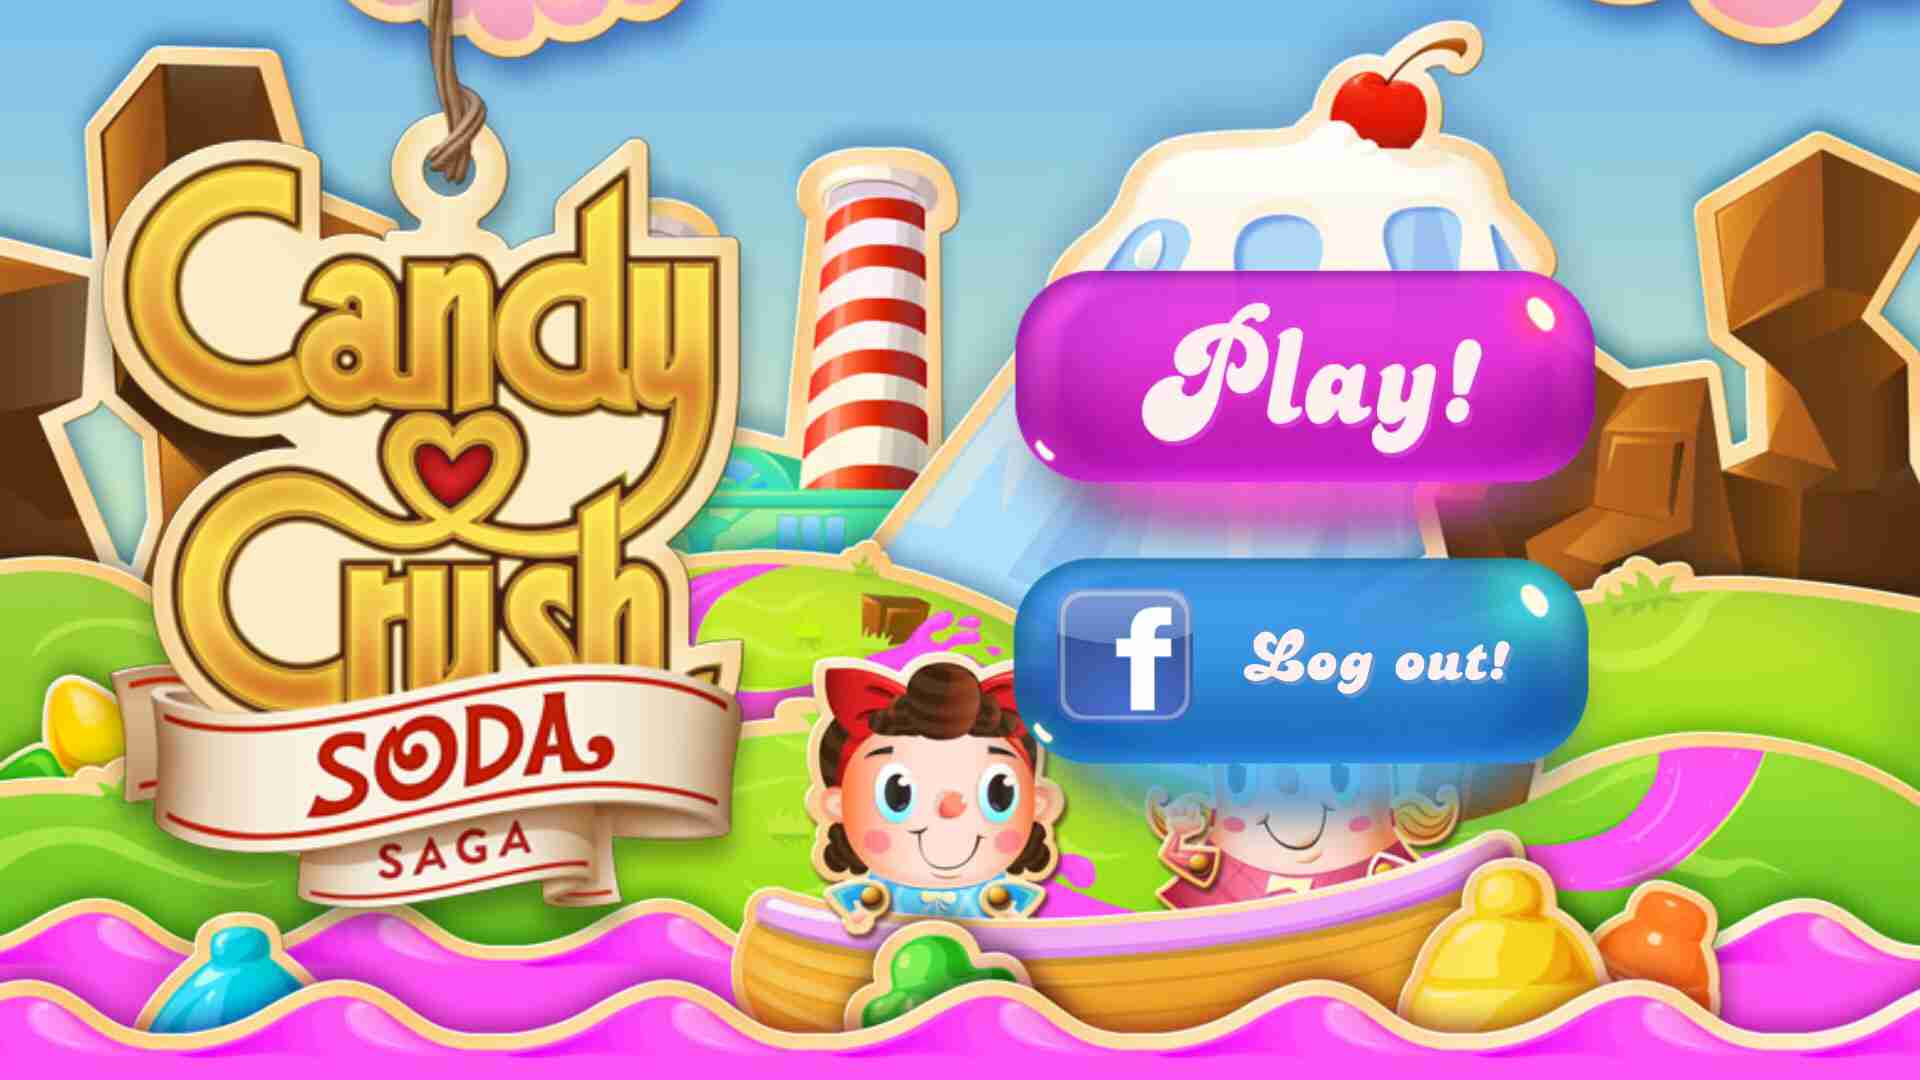 Candy Crush Soda Saga MOD (Gold, All Items, Infinite Plays, Levels) APK  1.268.5